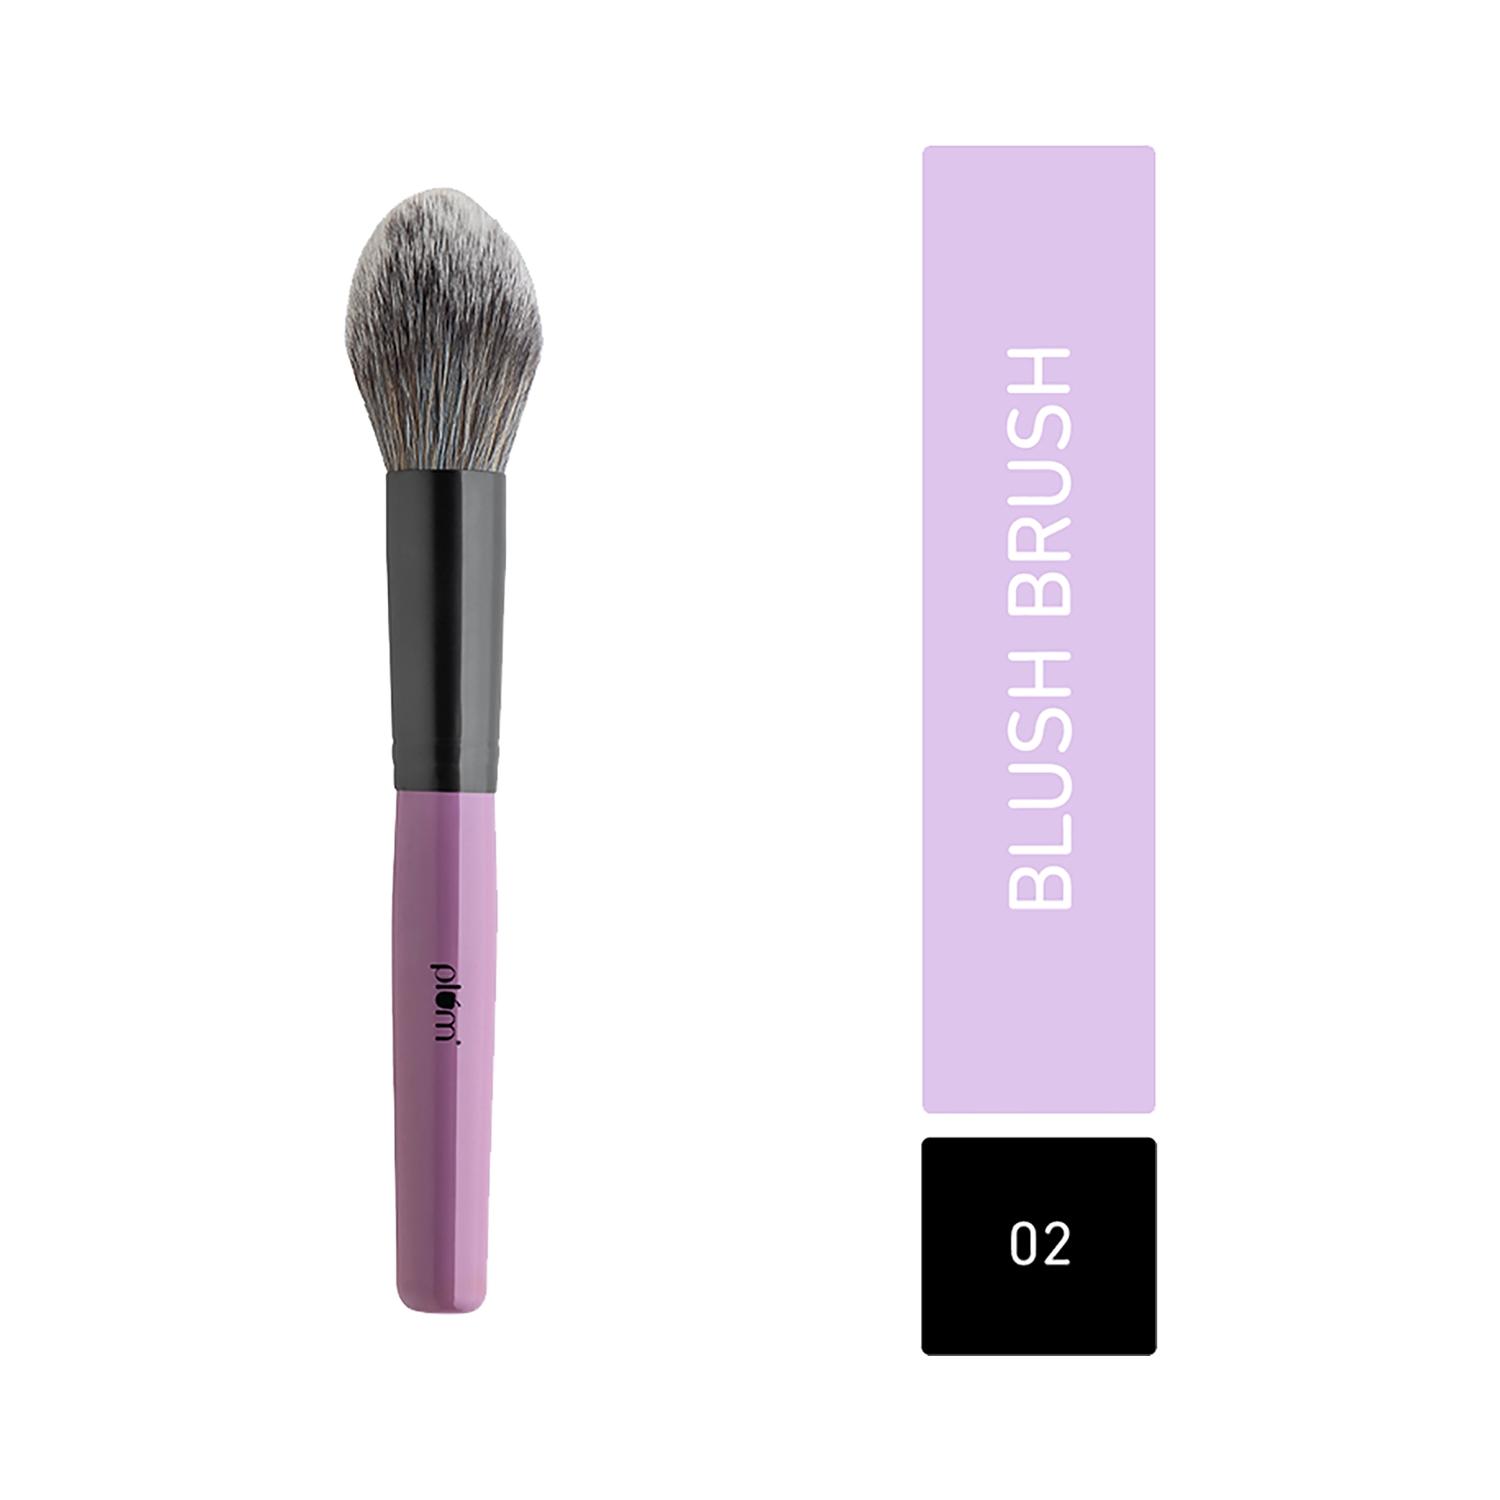 plum soft blend blush brush - 02 purple & black